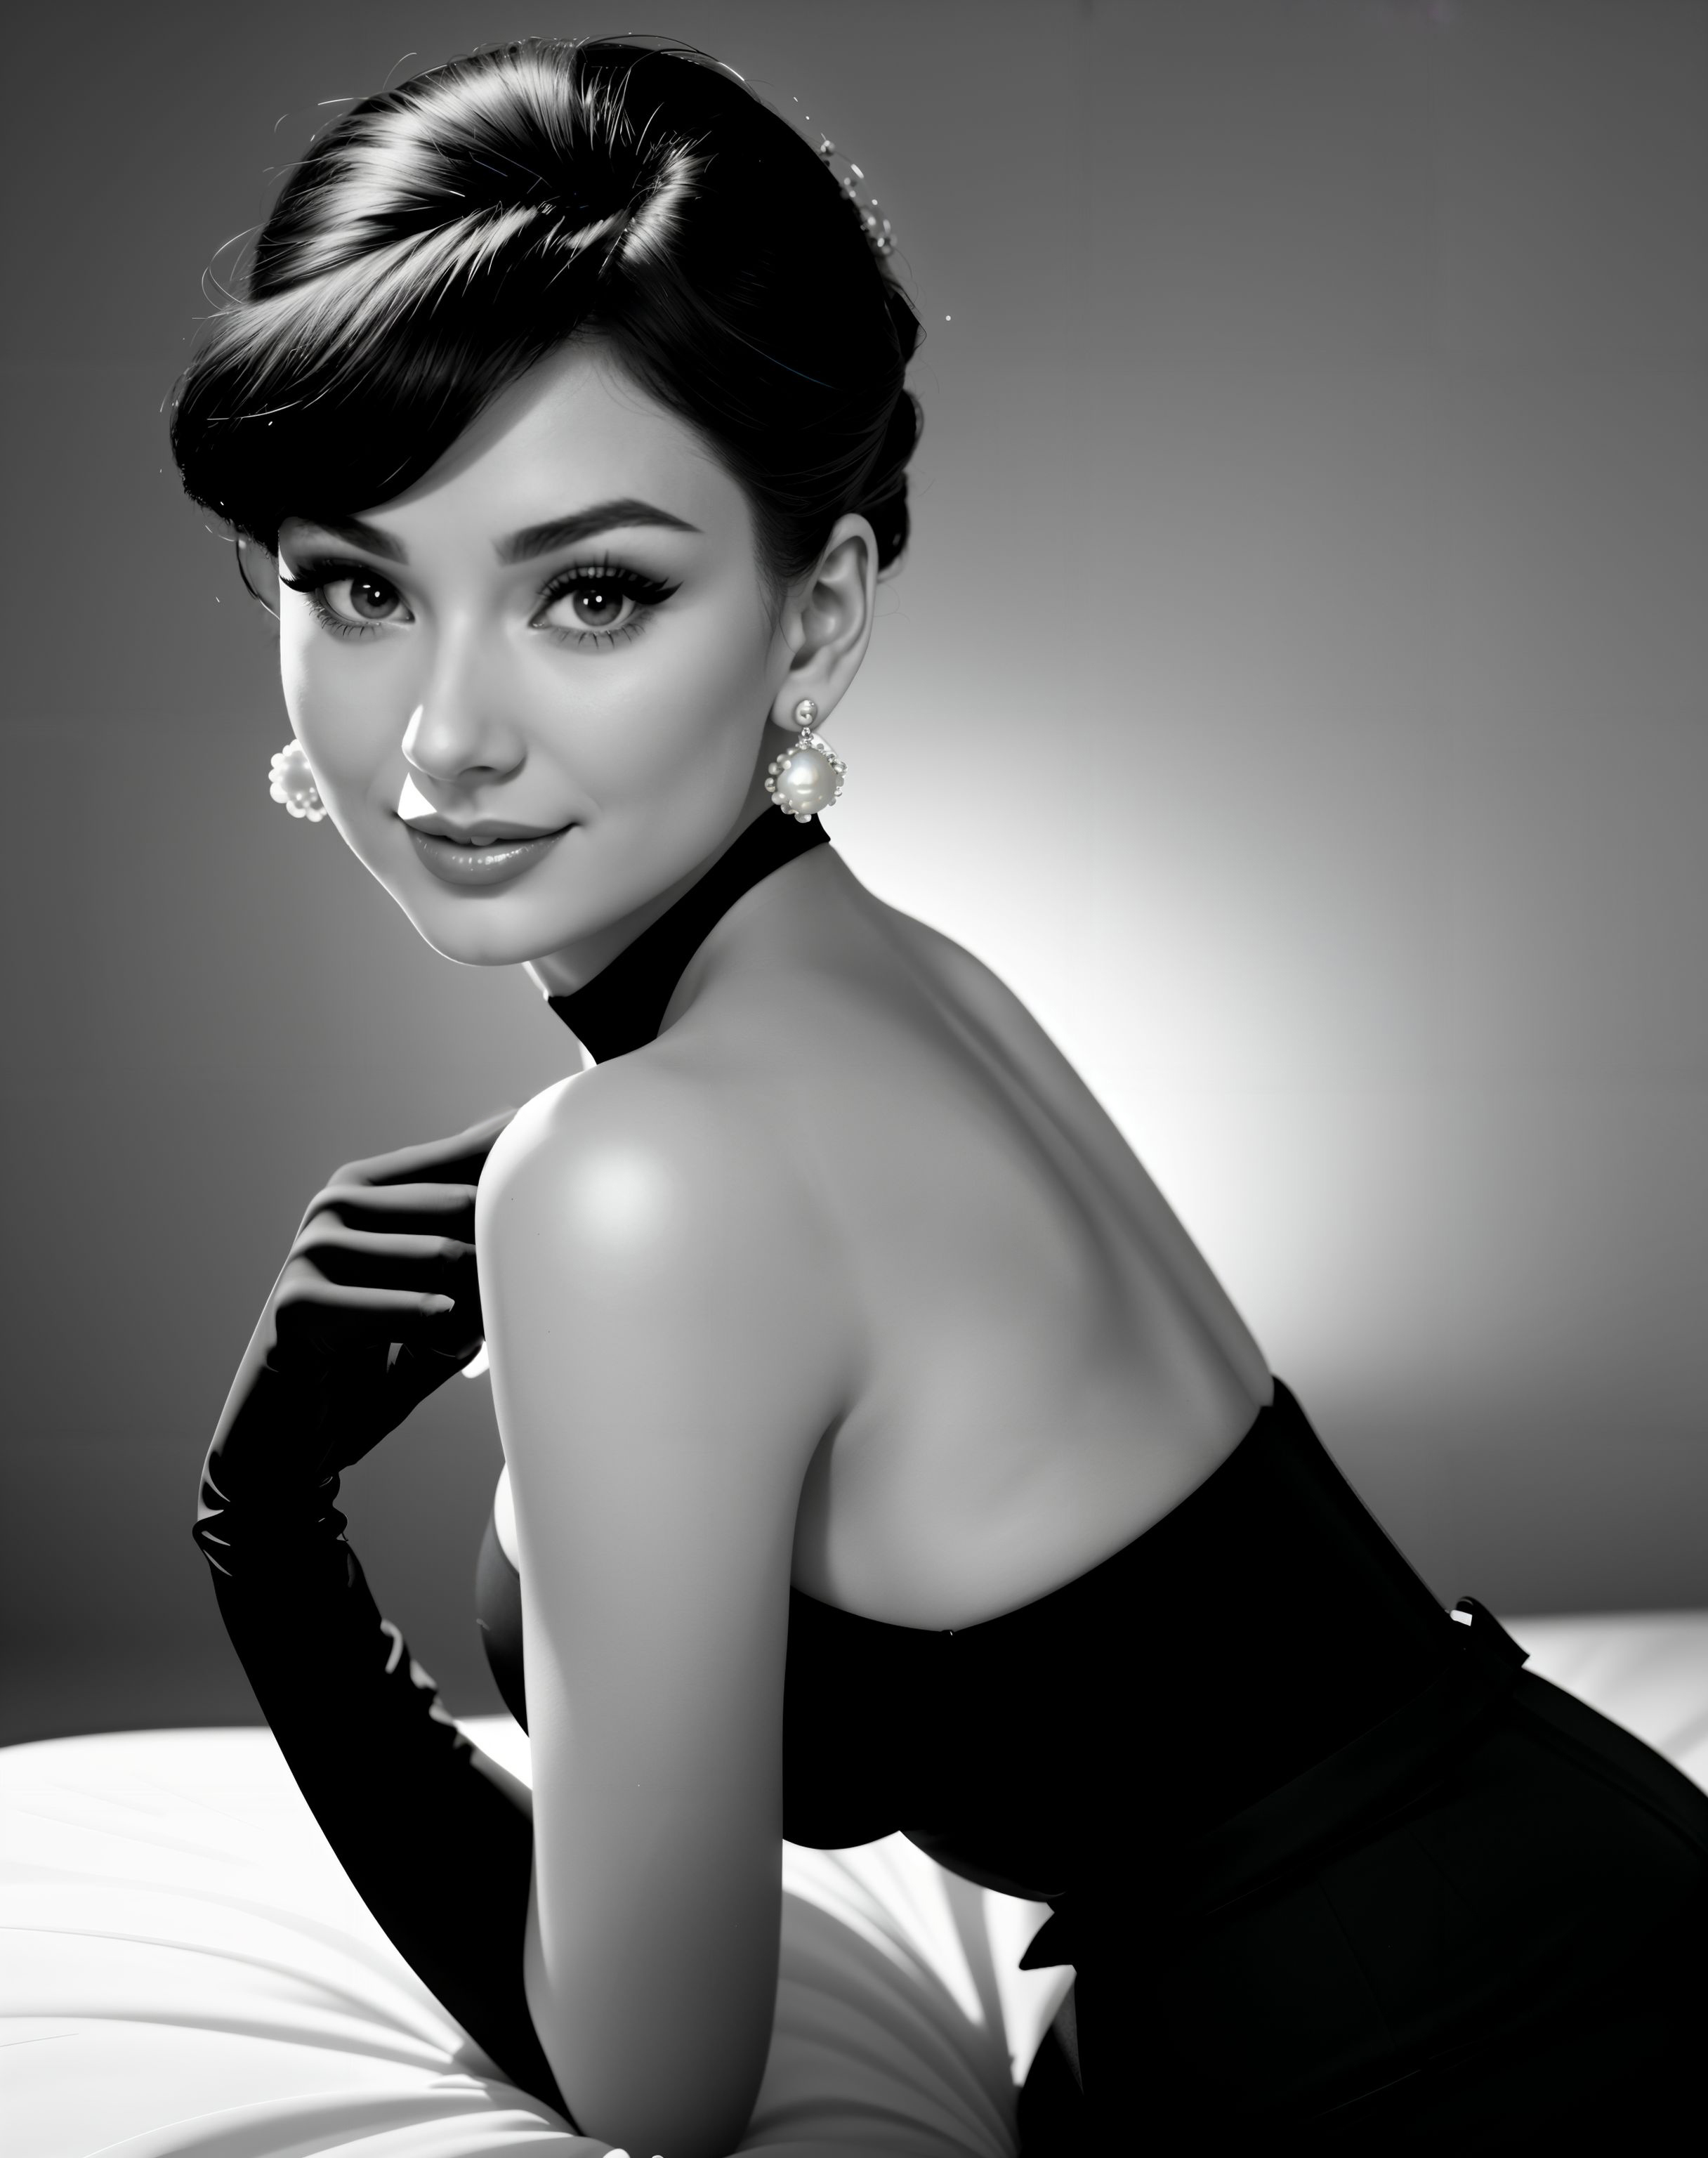 Audrey Hepburn image by Crash67